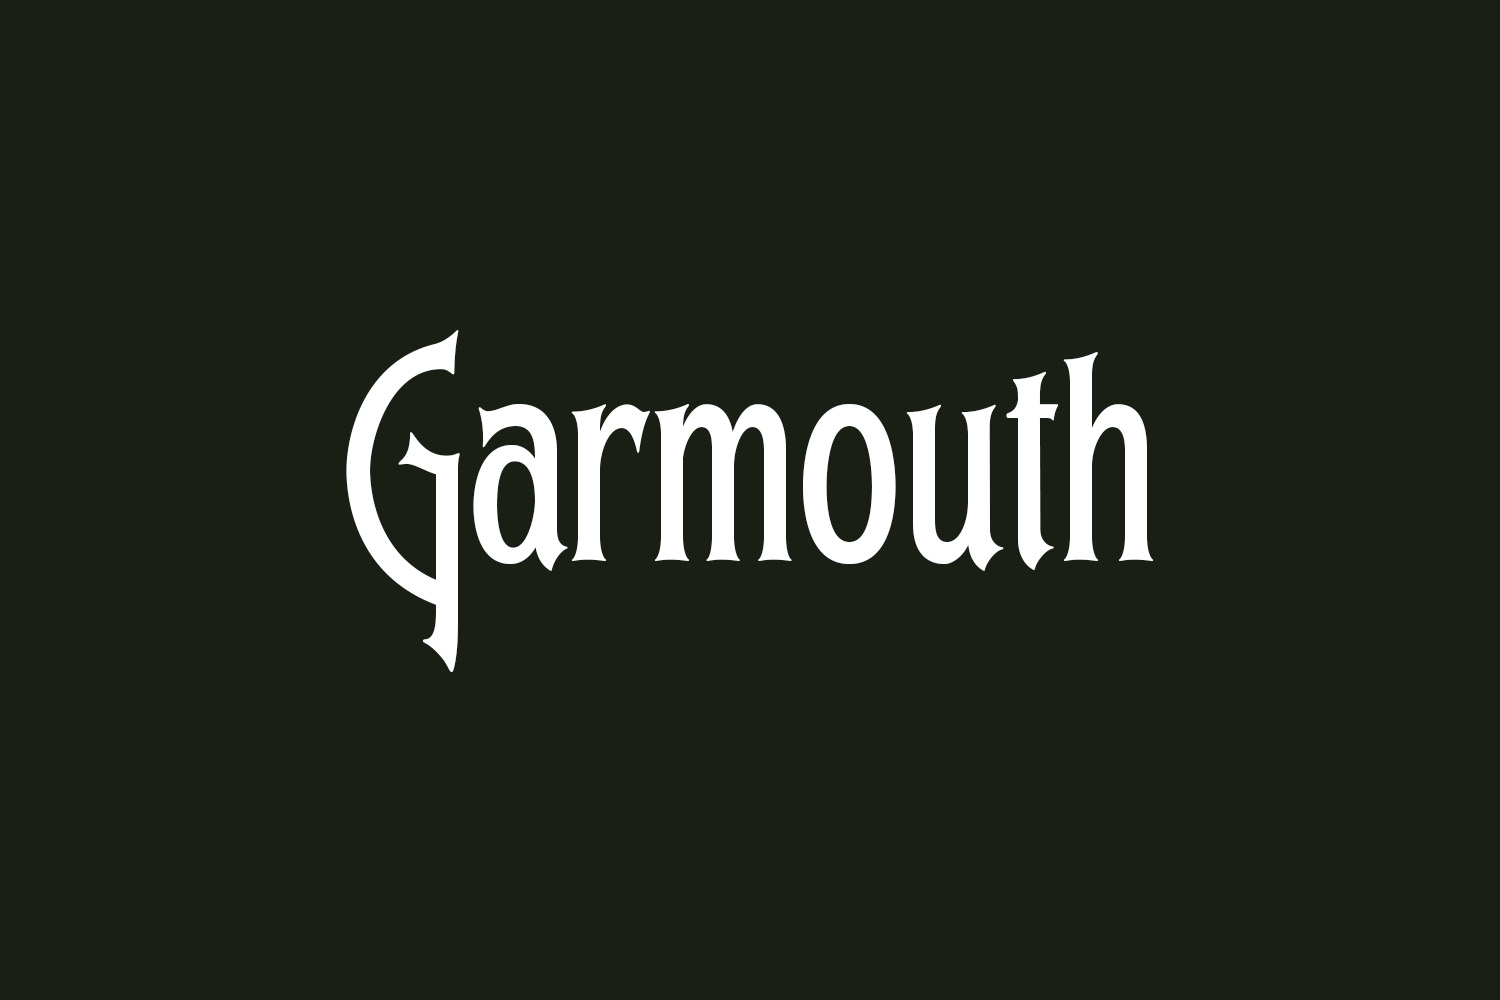 Garmouth Free Font